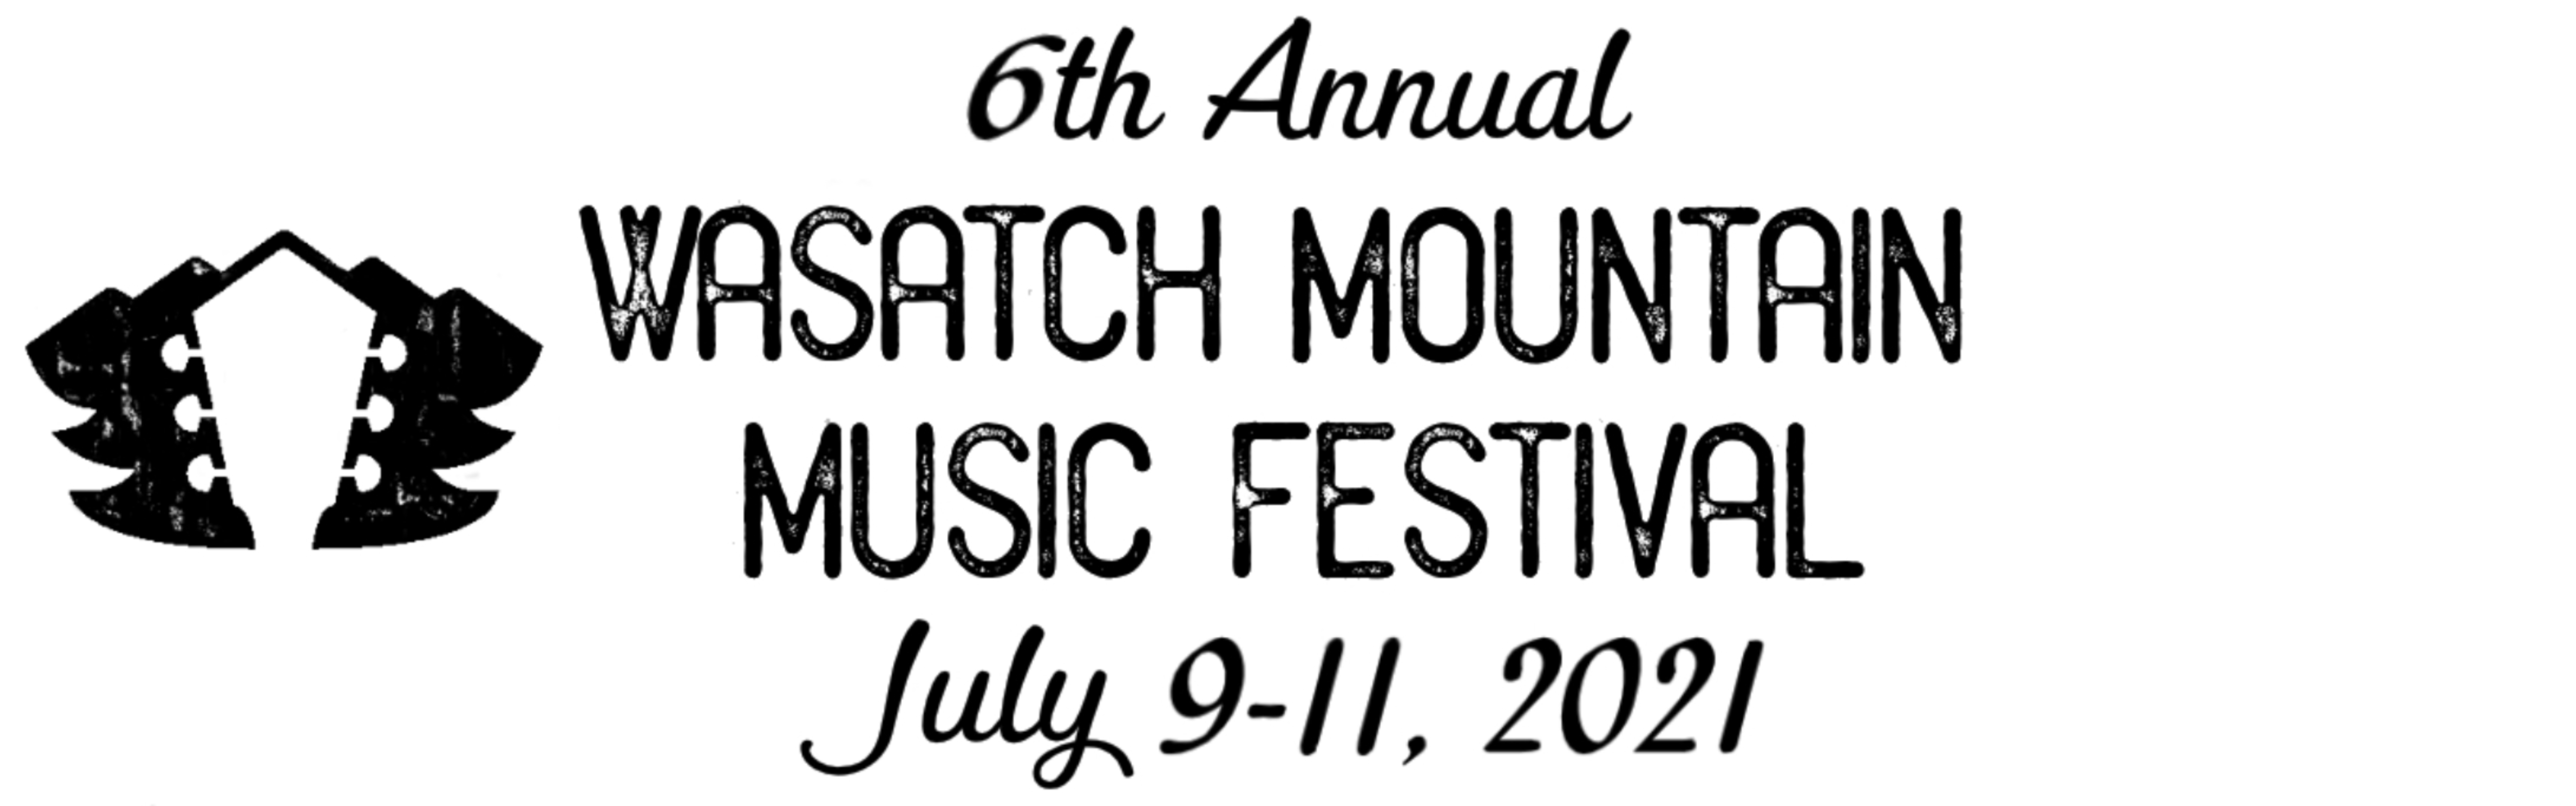 Wasatch Mountain Music